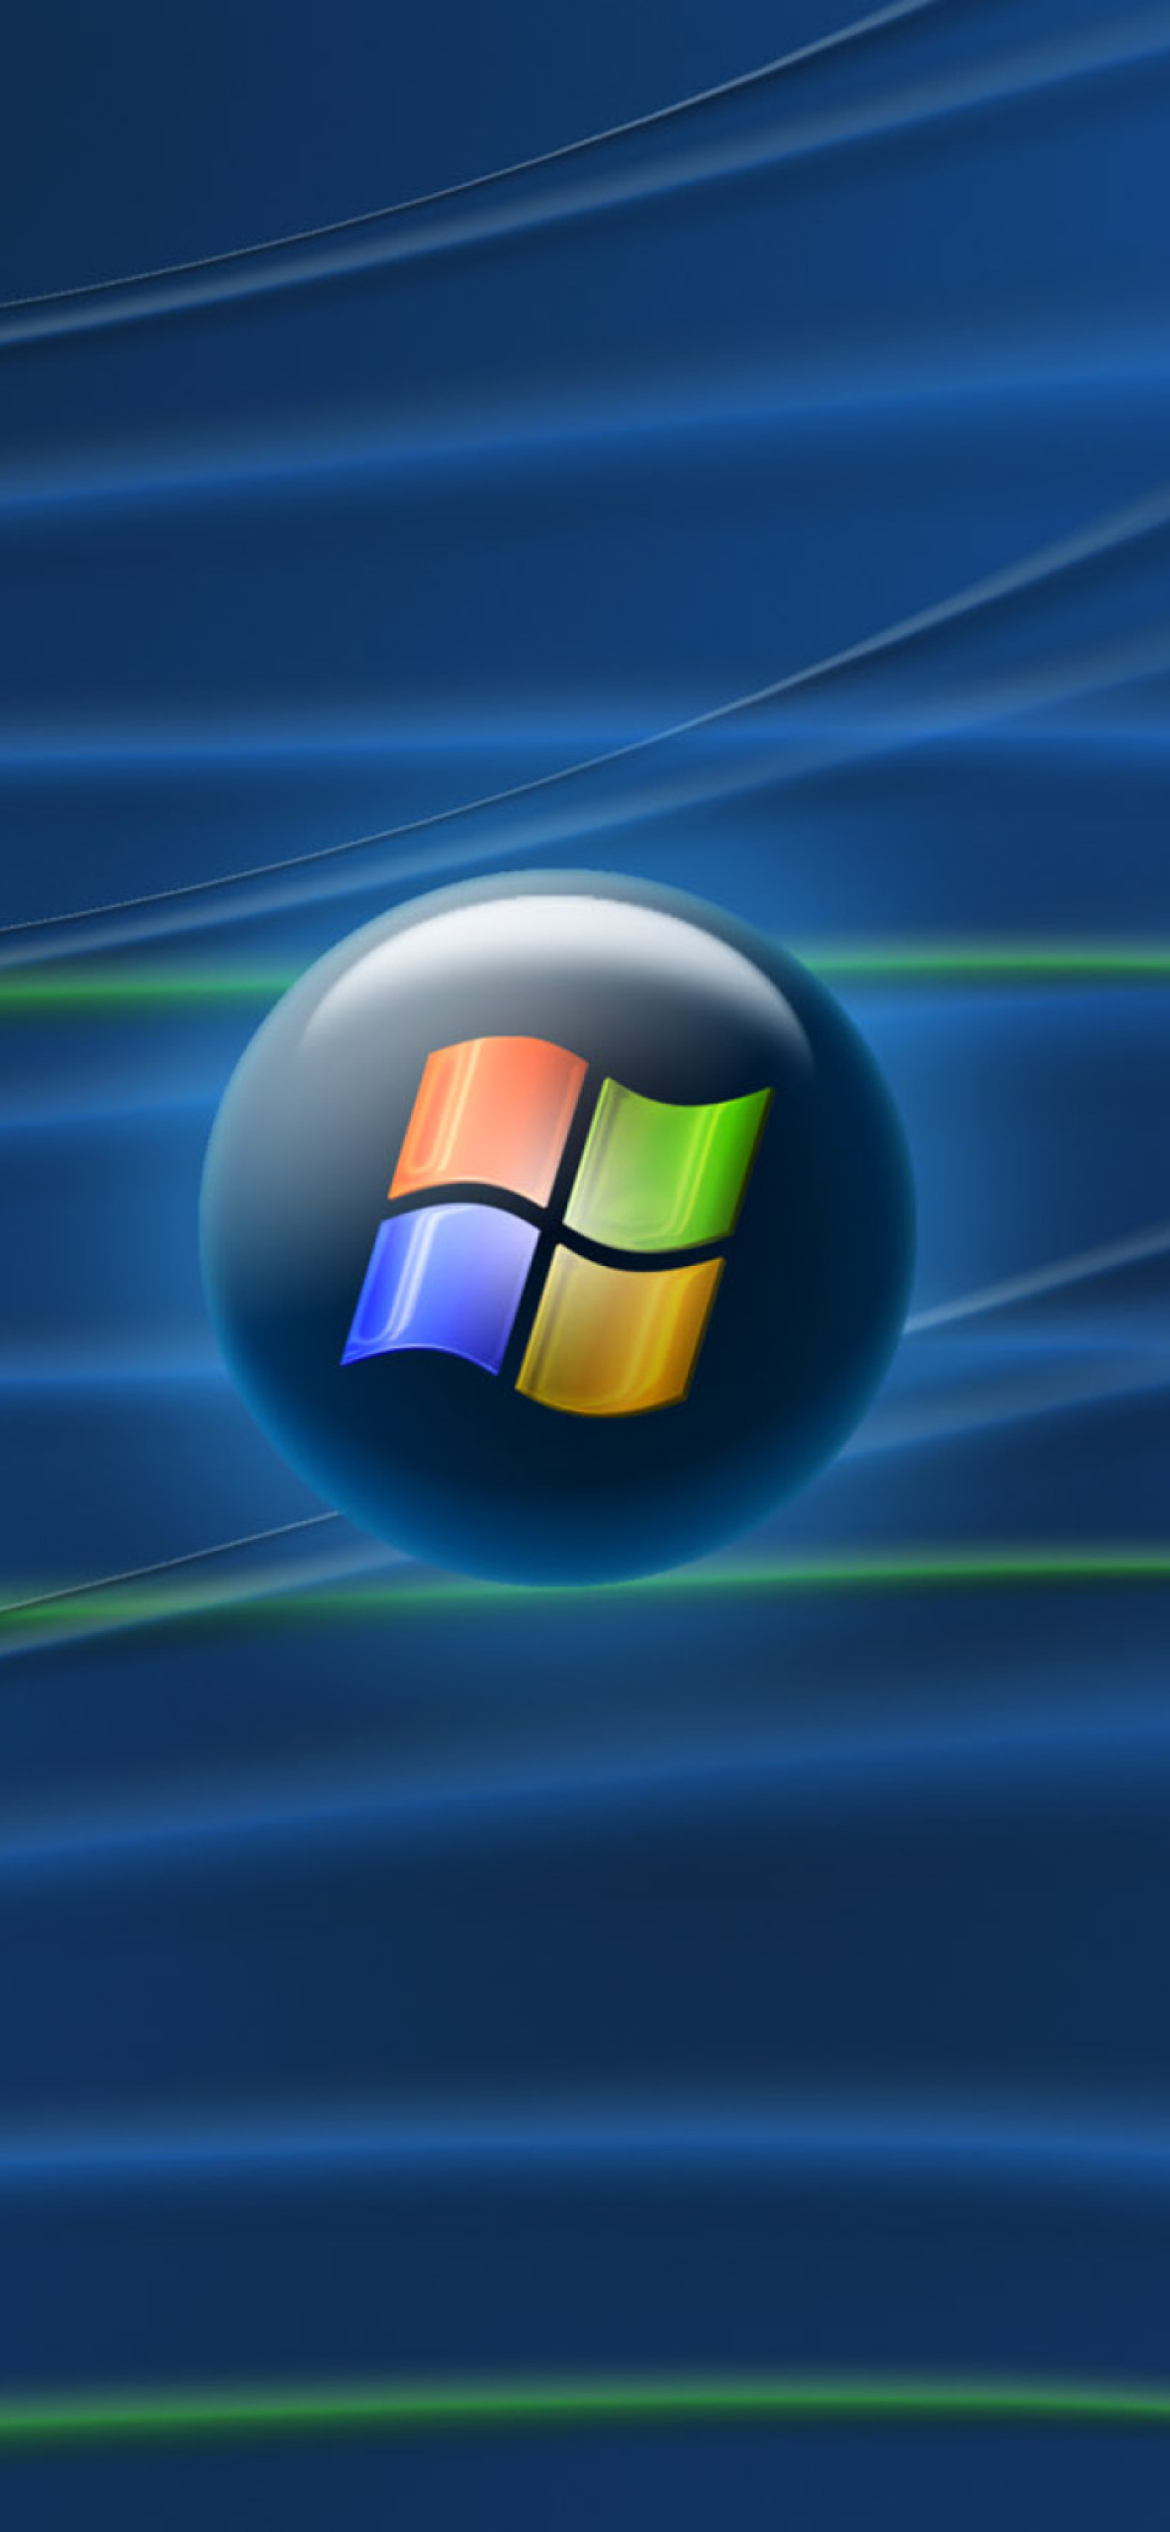 Blue Windows Vista wallpaper 1170x2532